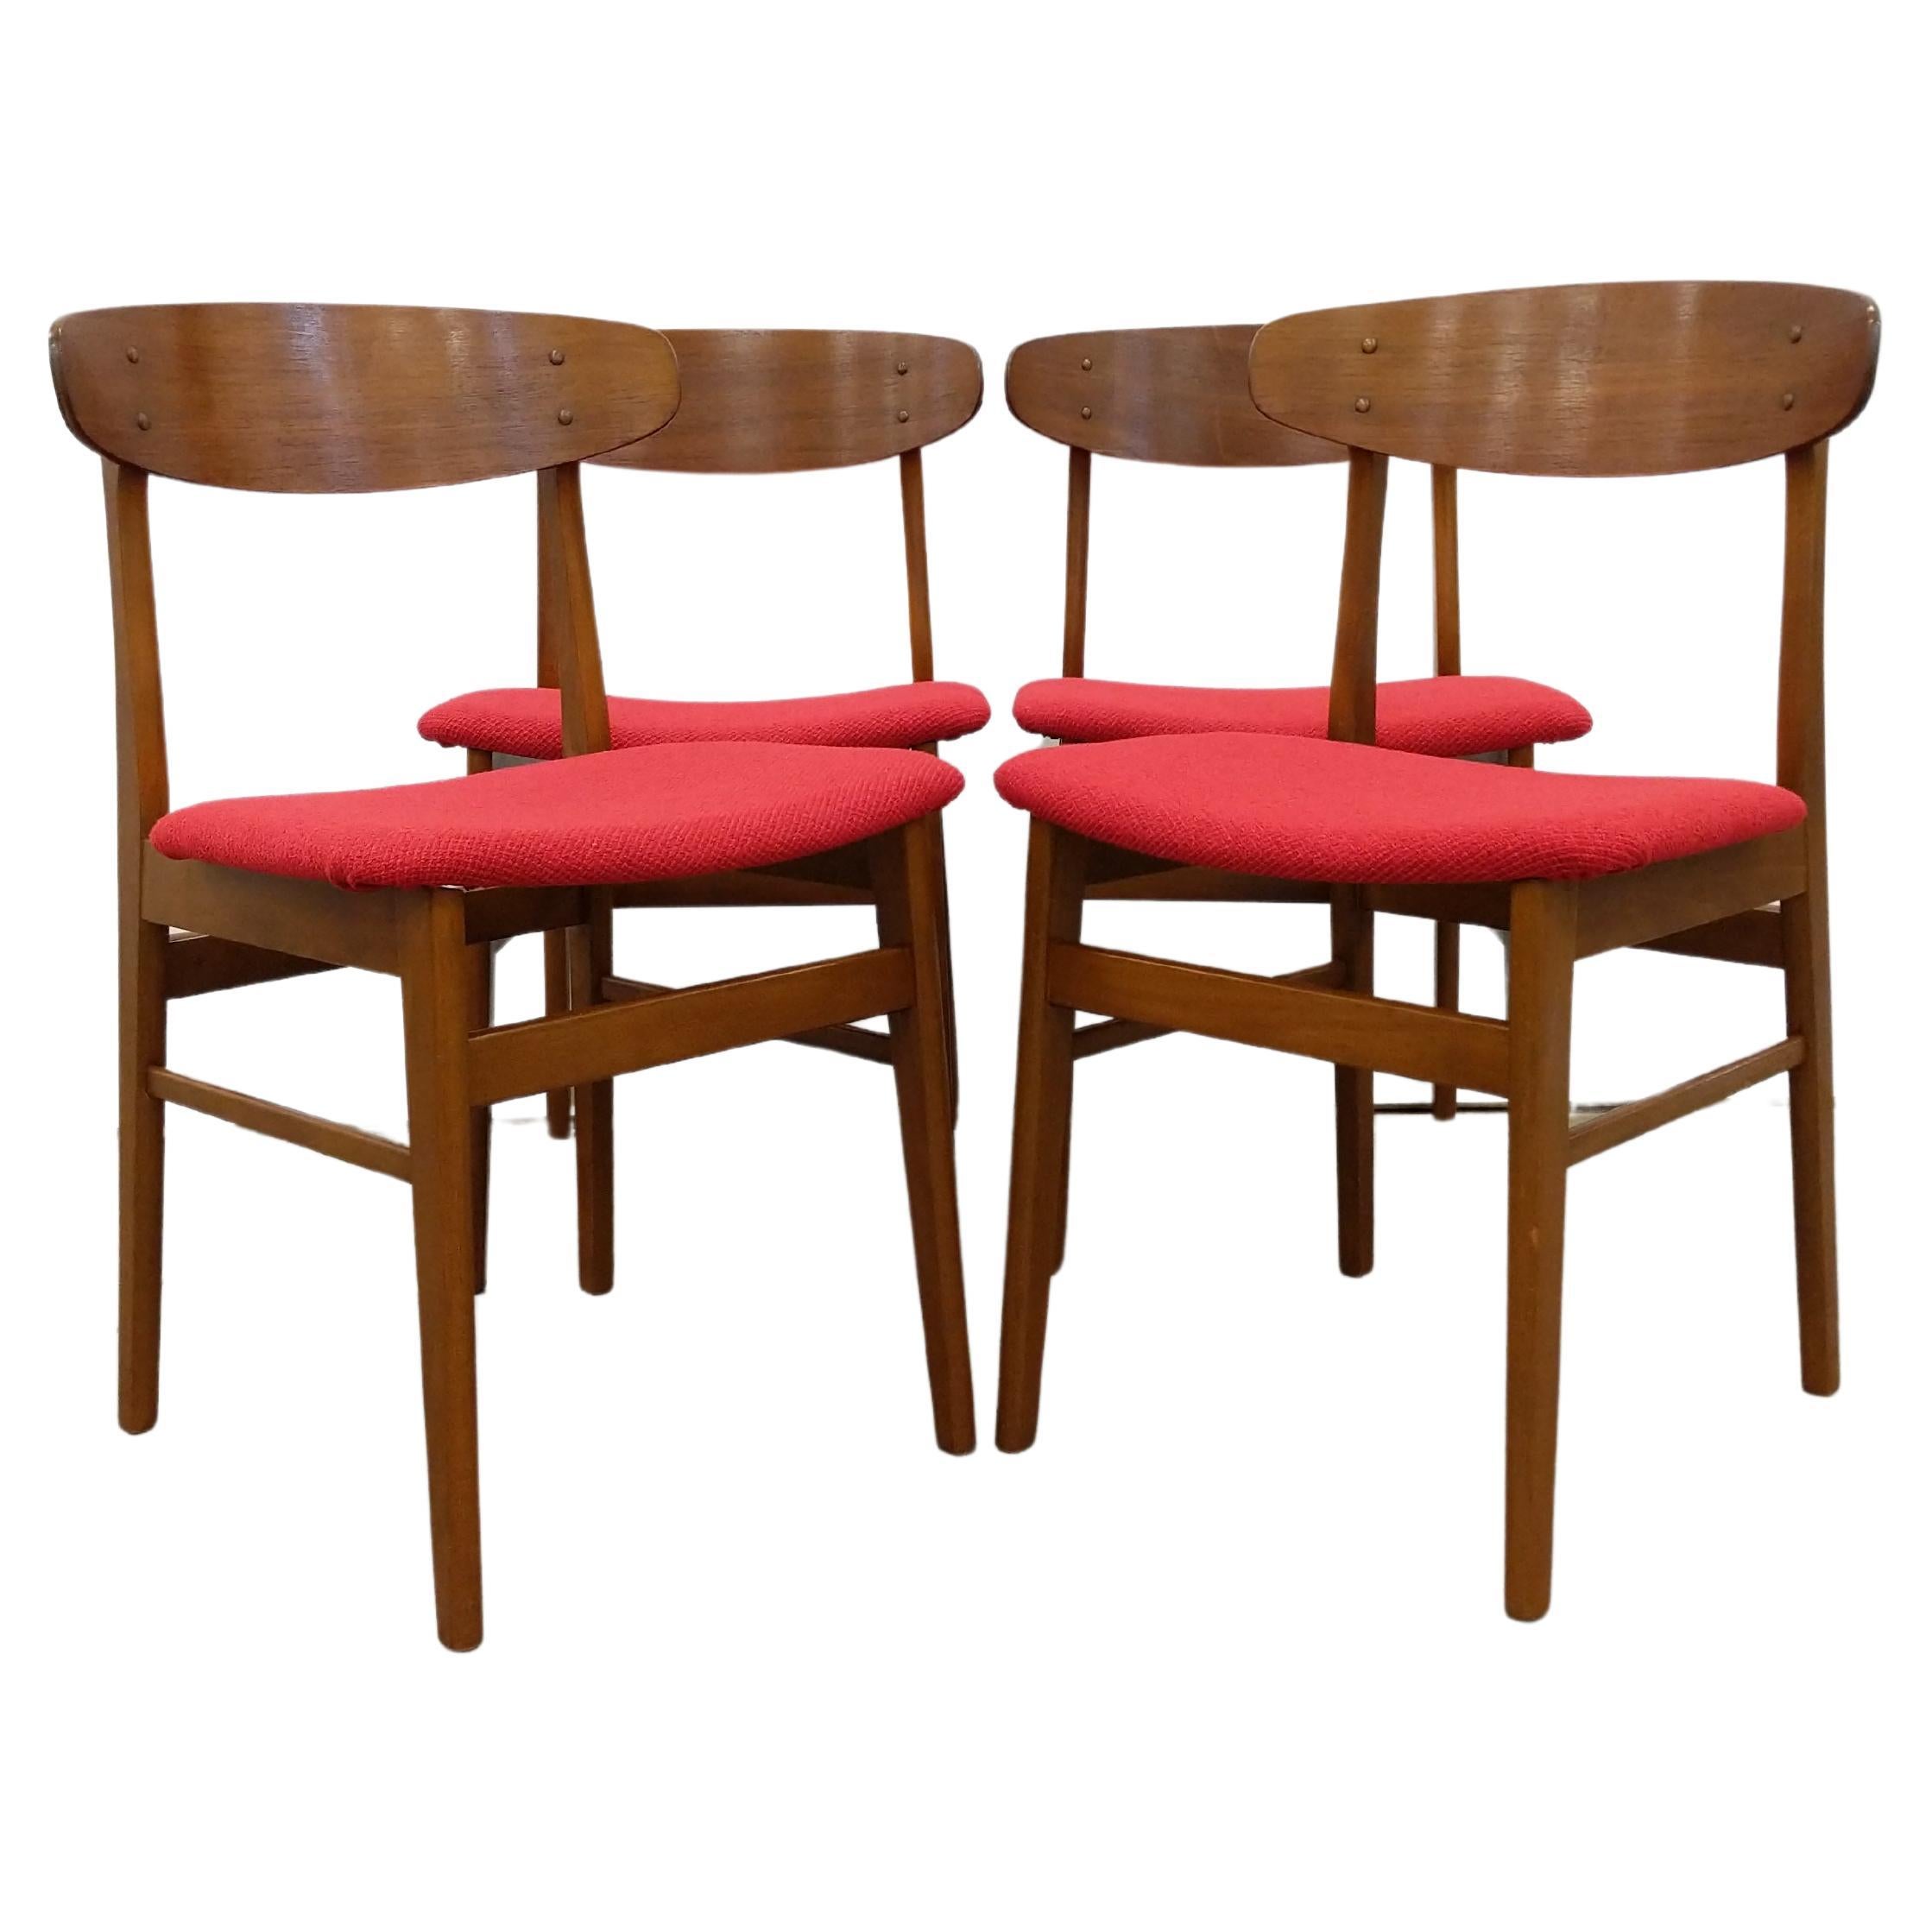 Set of 4 Vintage Danish Mid Century Modern Dining Chairs